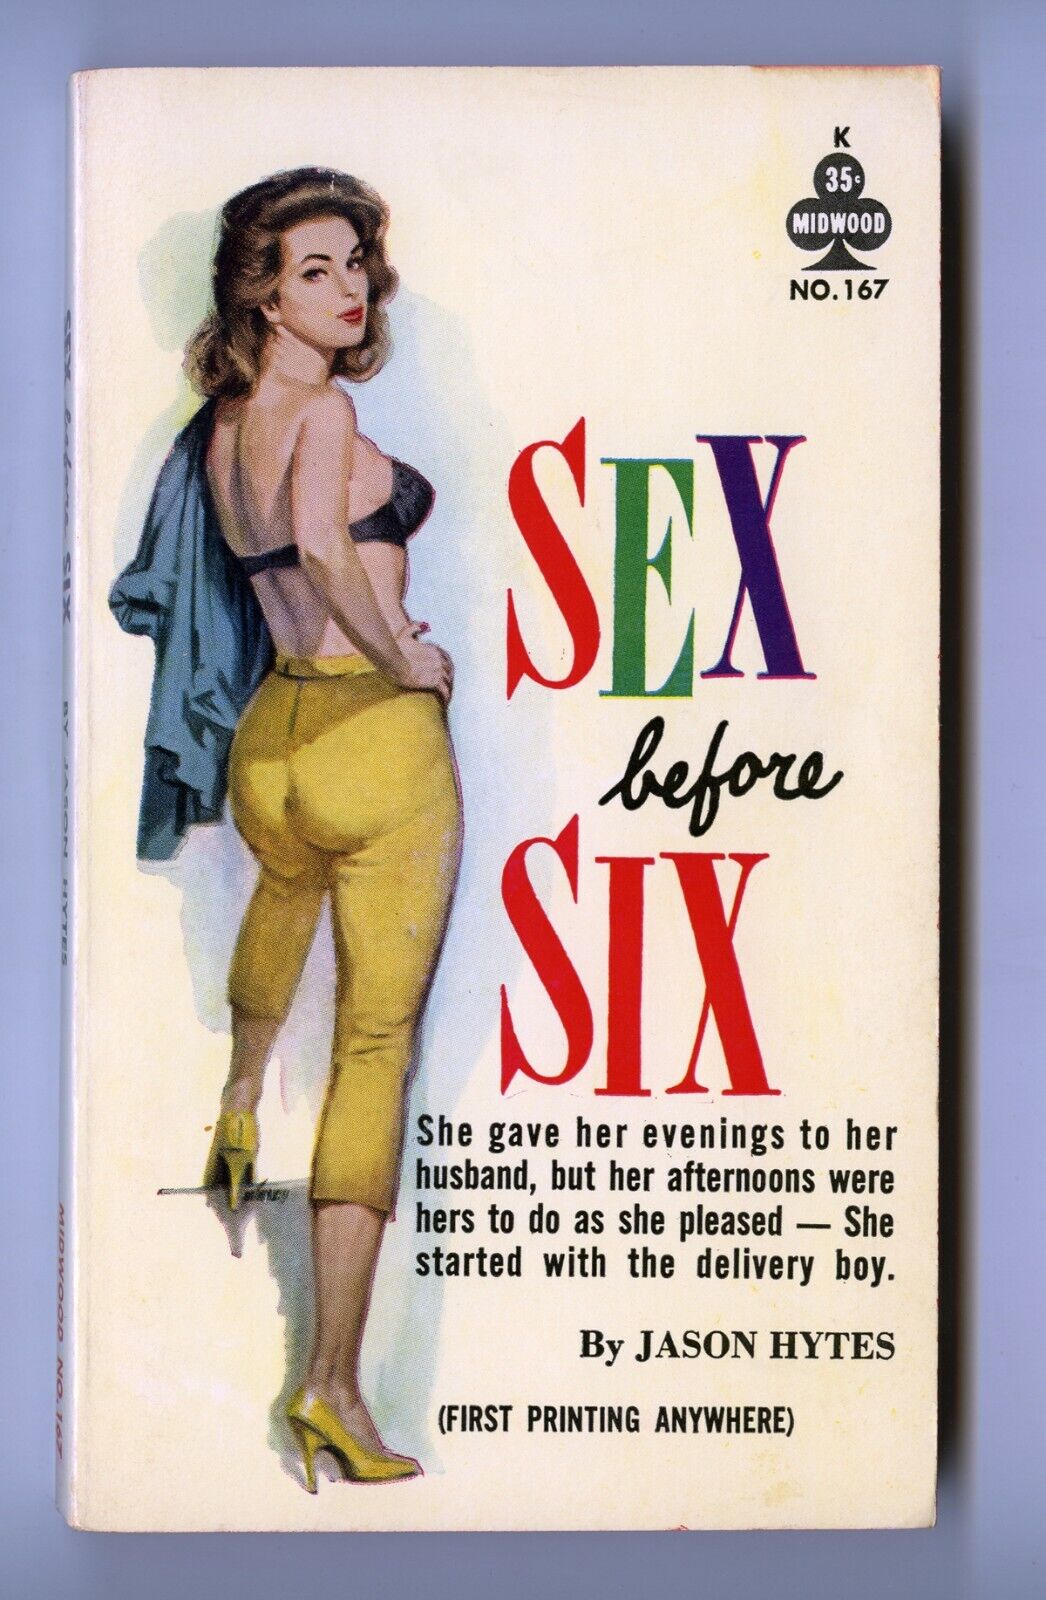 SEX BEFORE SIX Vintage sleaze GGA paperback MIDWOOD Jason Hytes for Sale picture